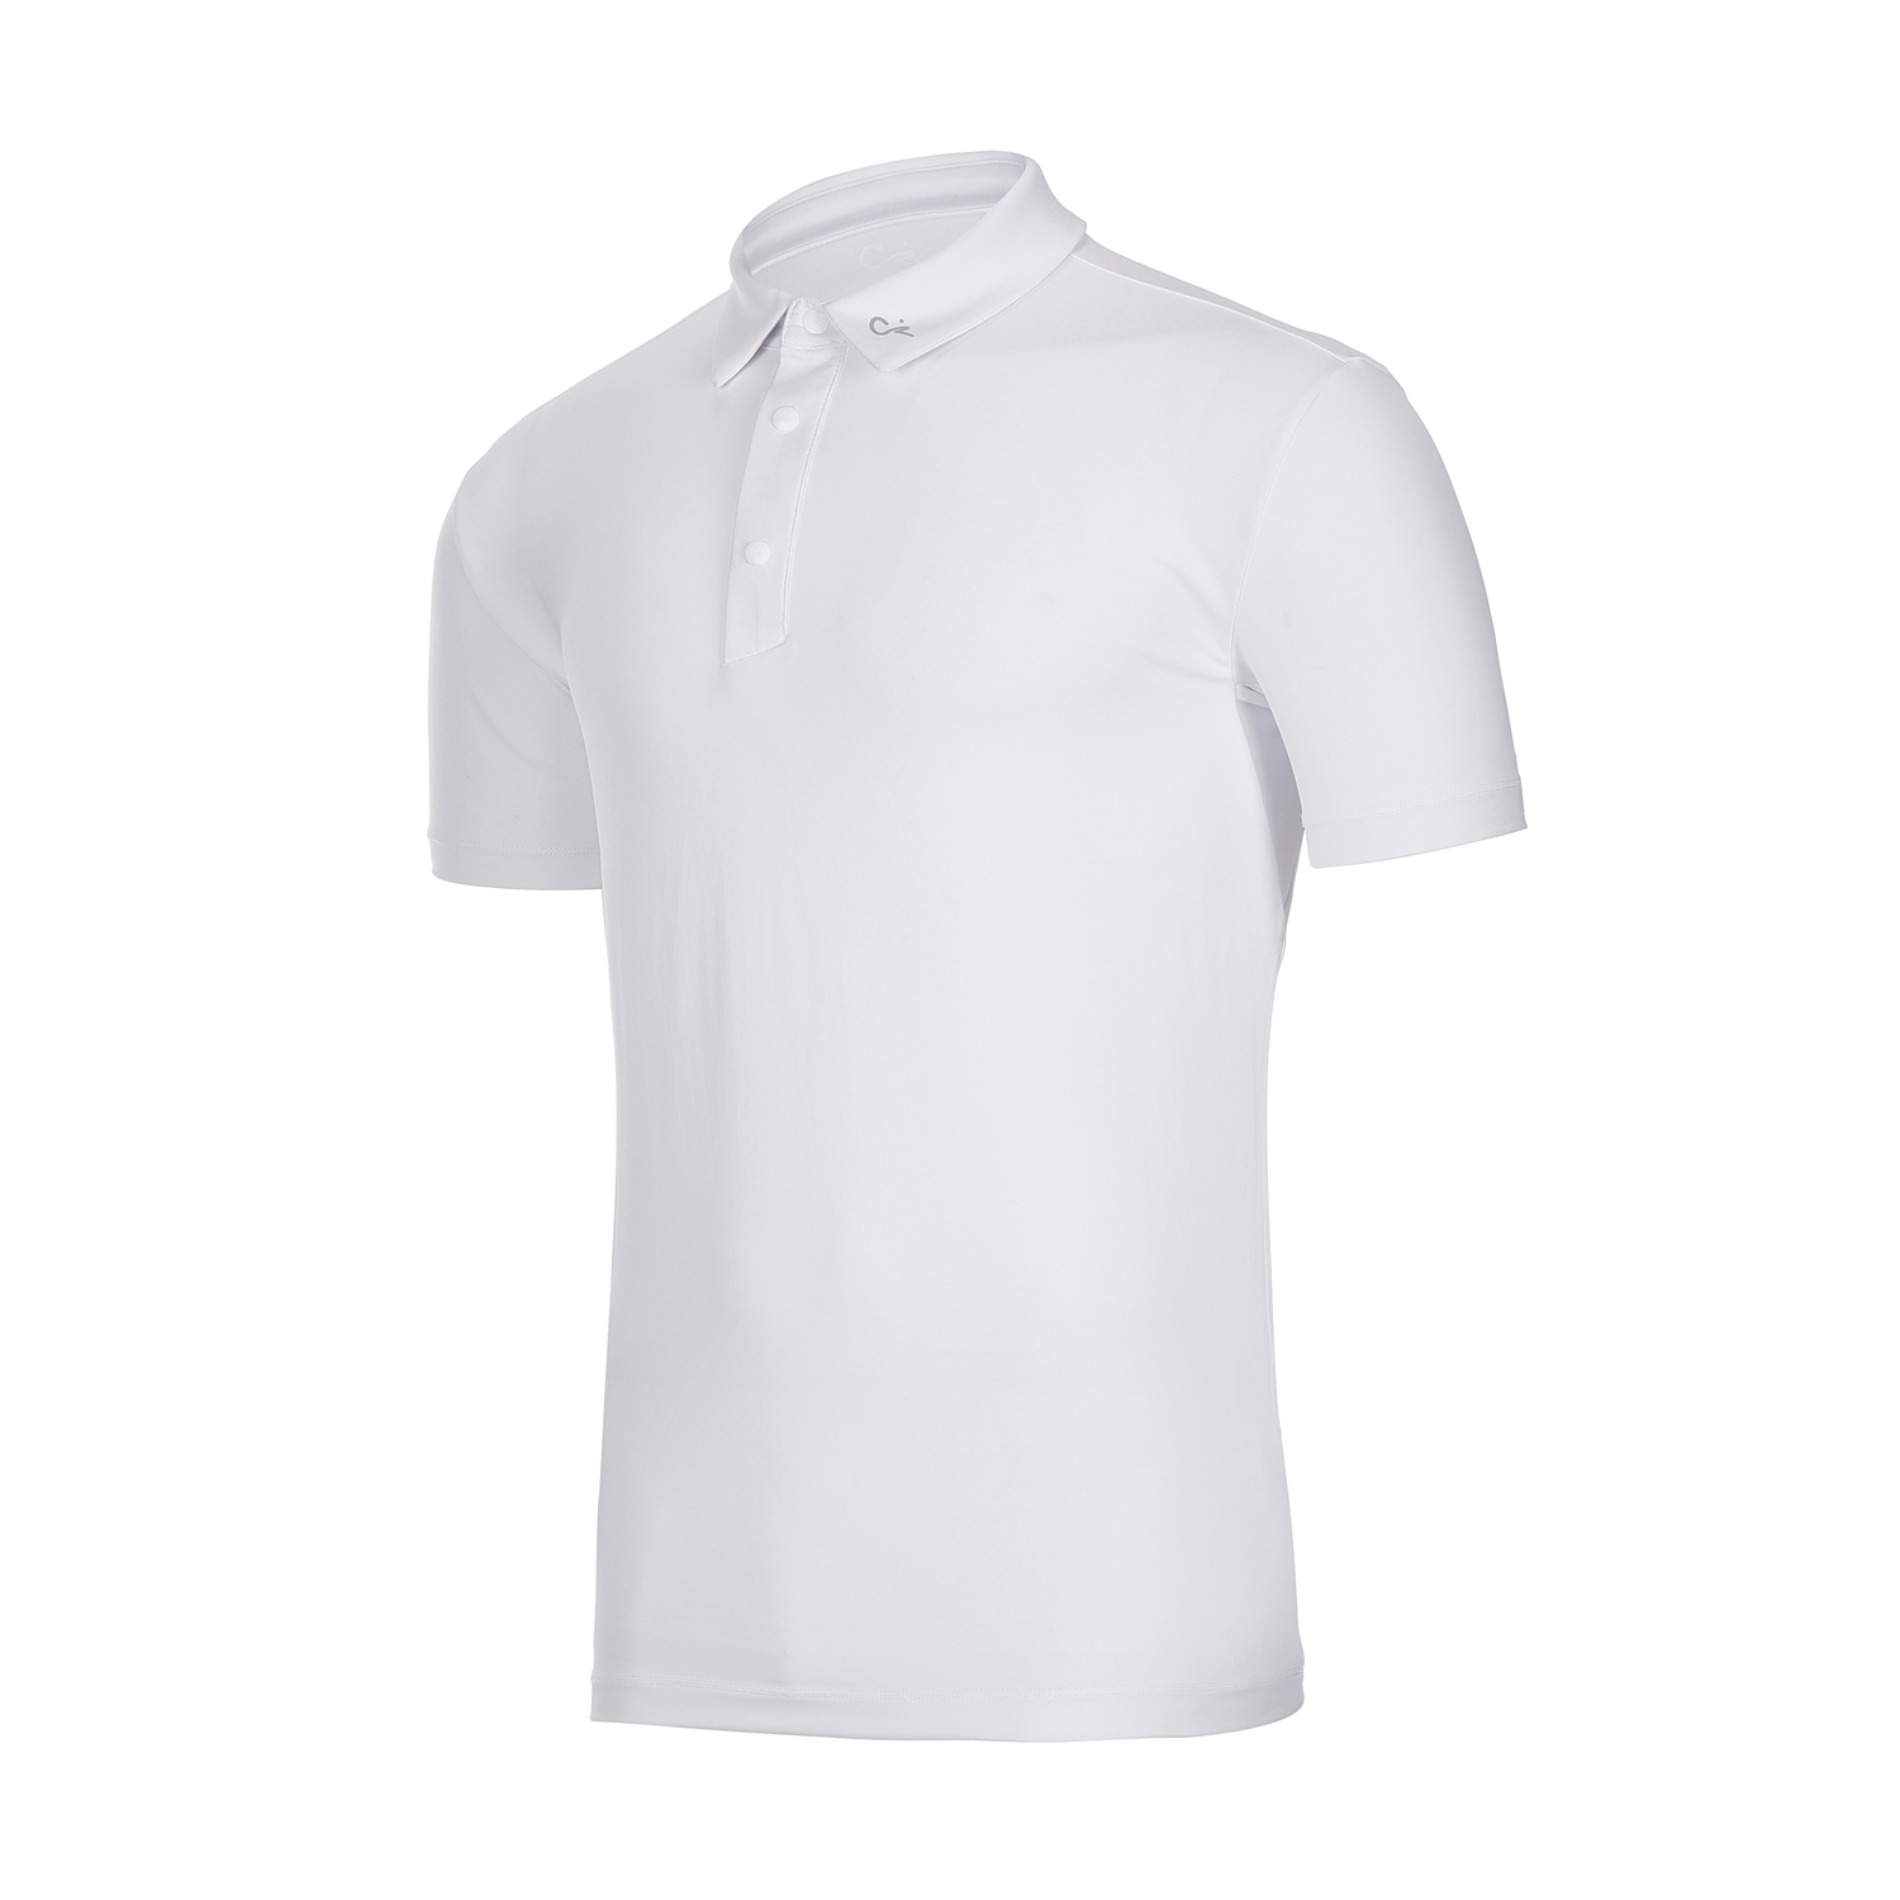 CR Standard PK t shirt White